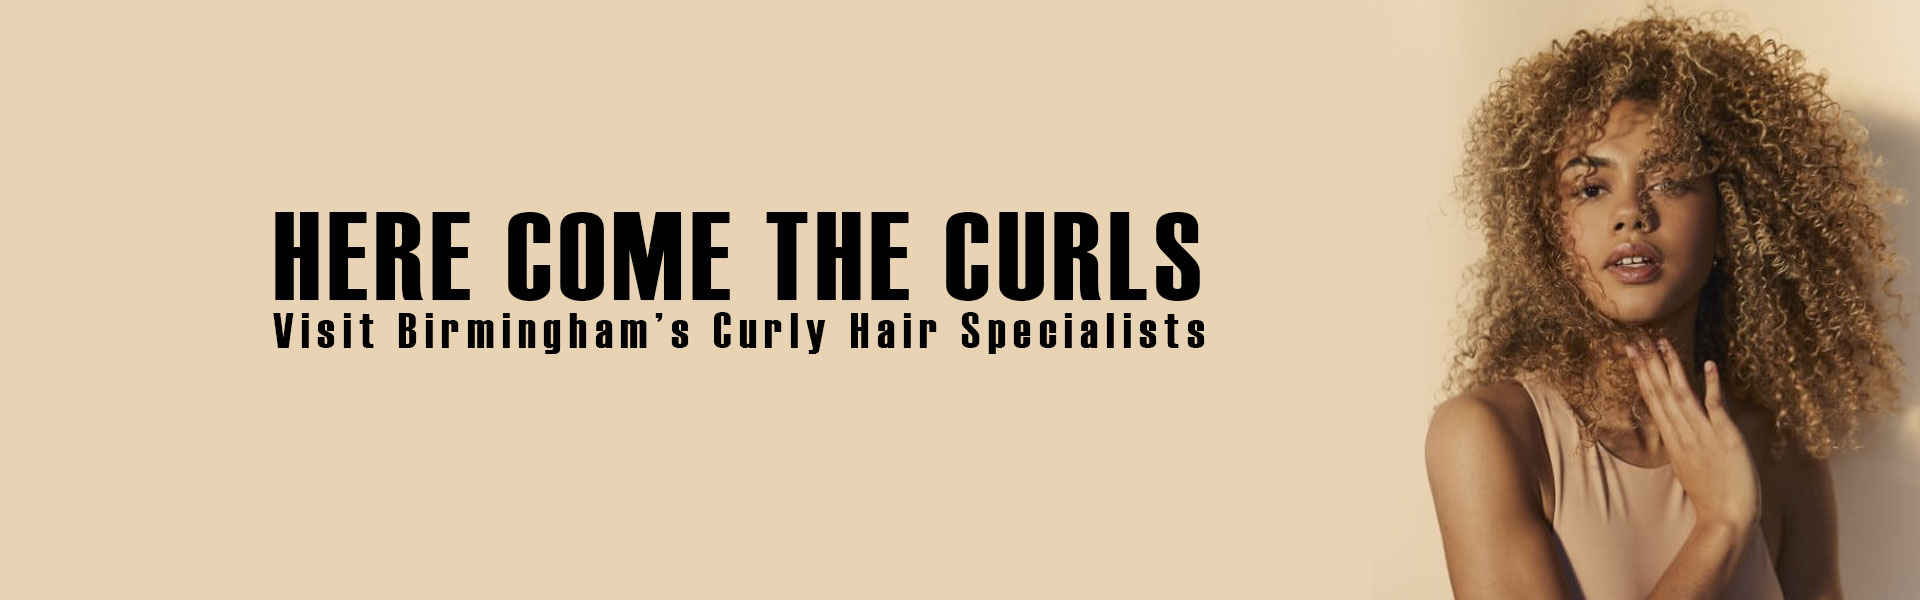 curly hair experts Birmingham